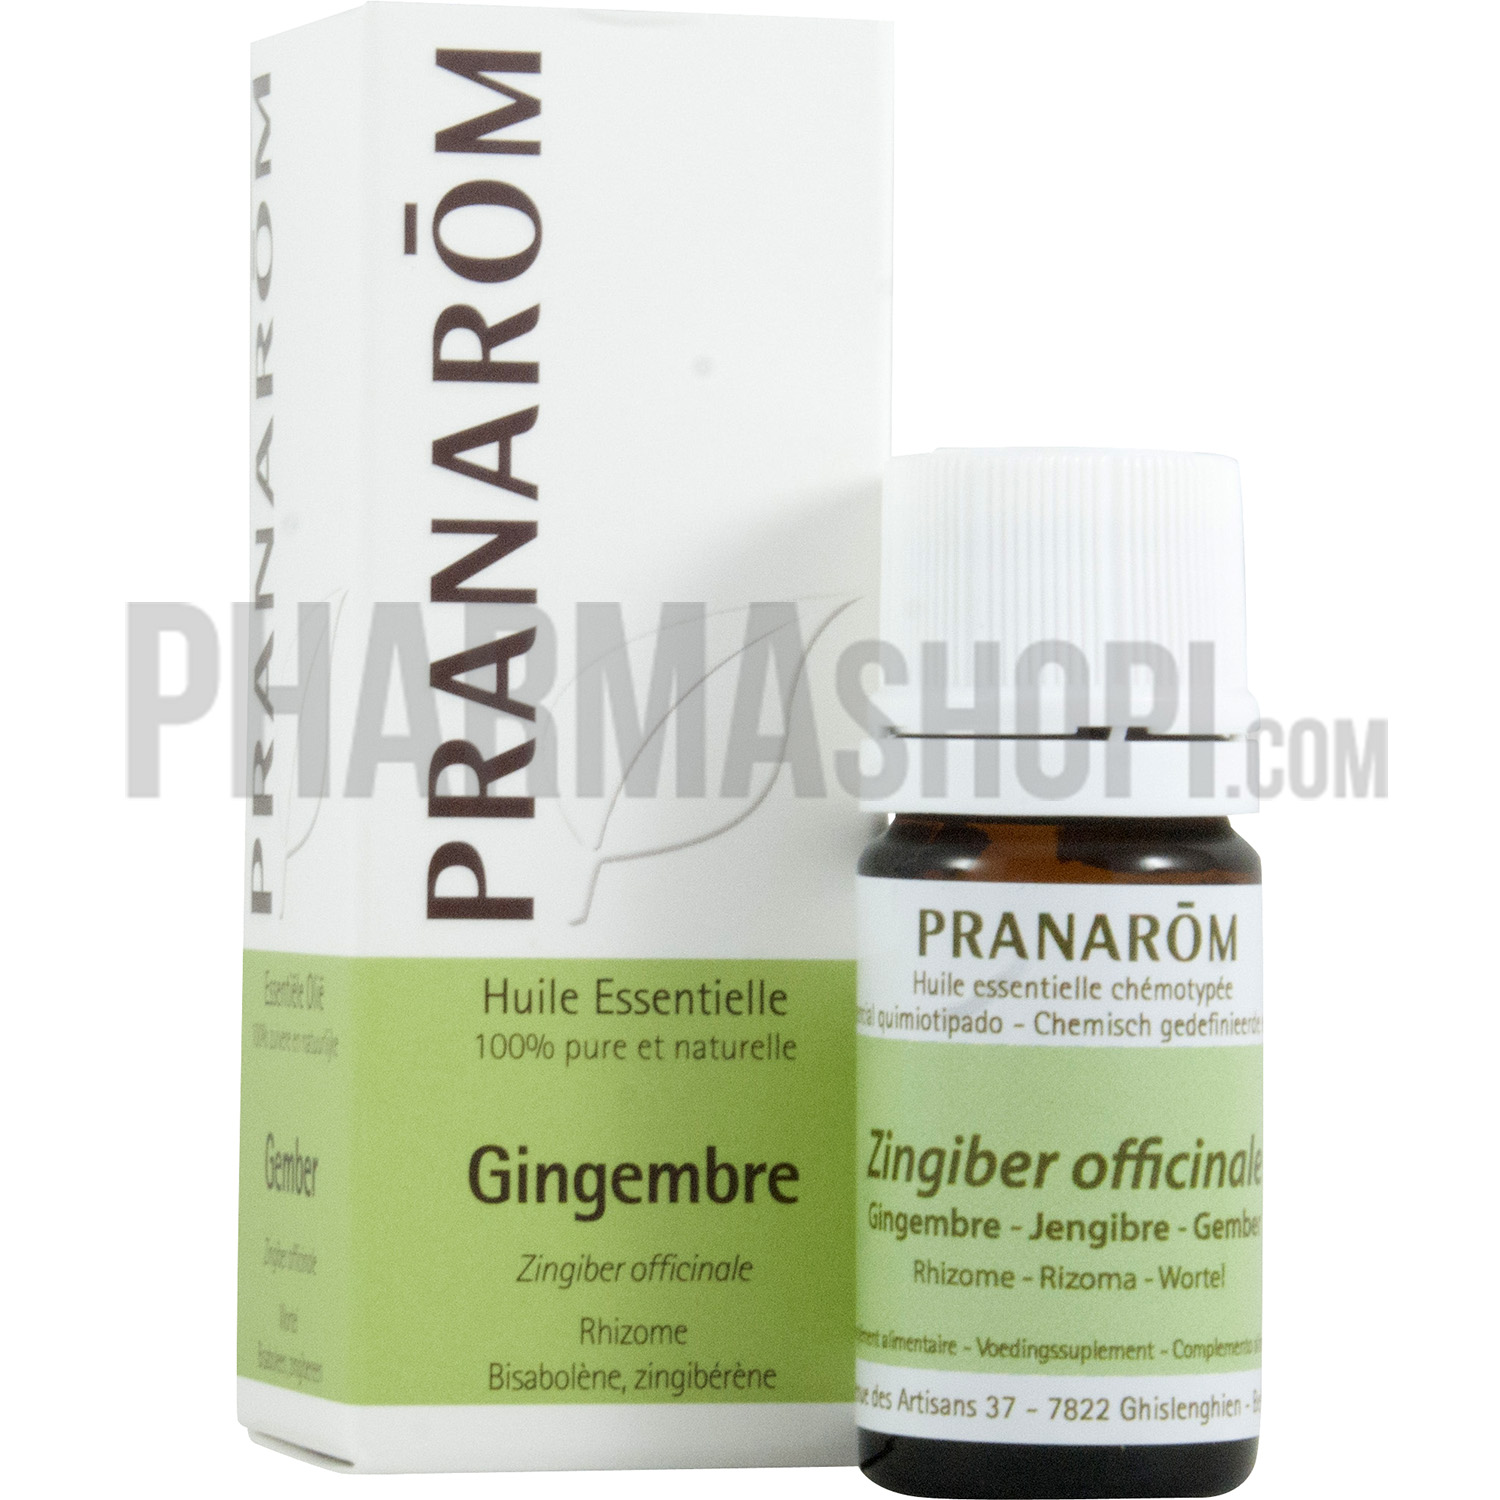 Huile essentielle de gingembre Pranarôm - flacon de 5 ml